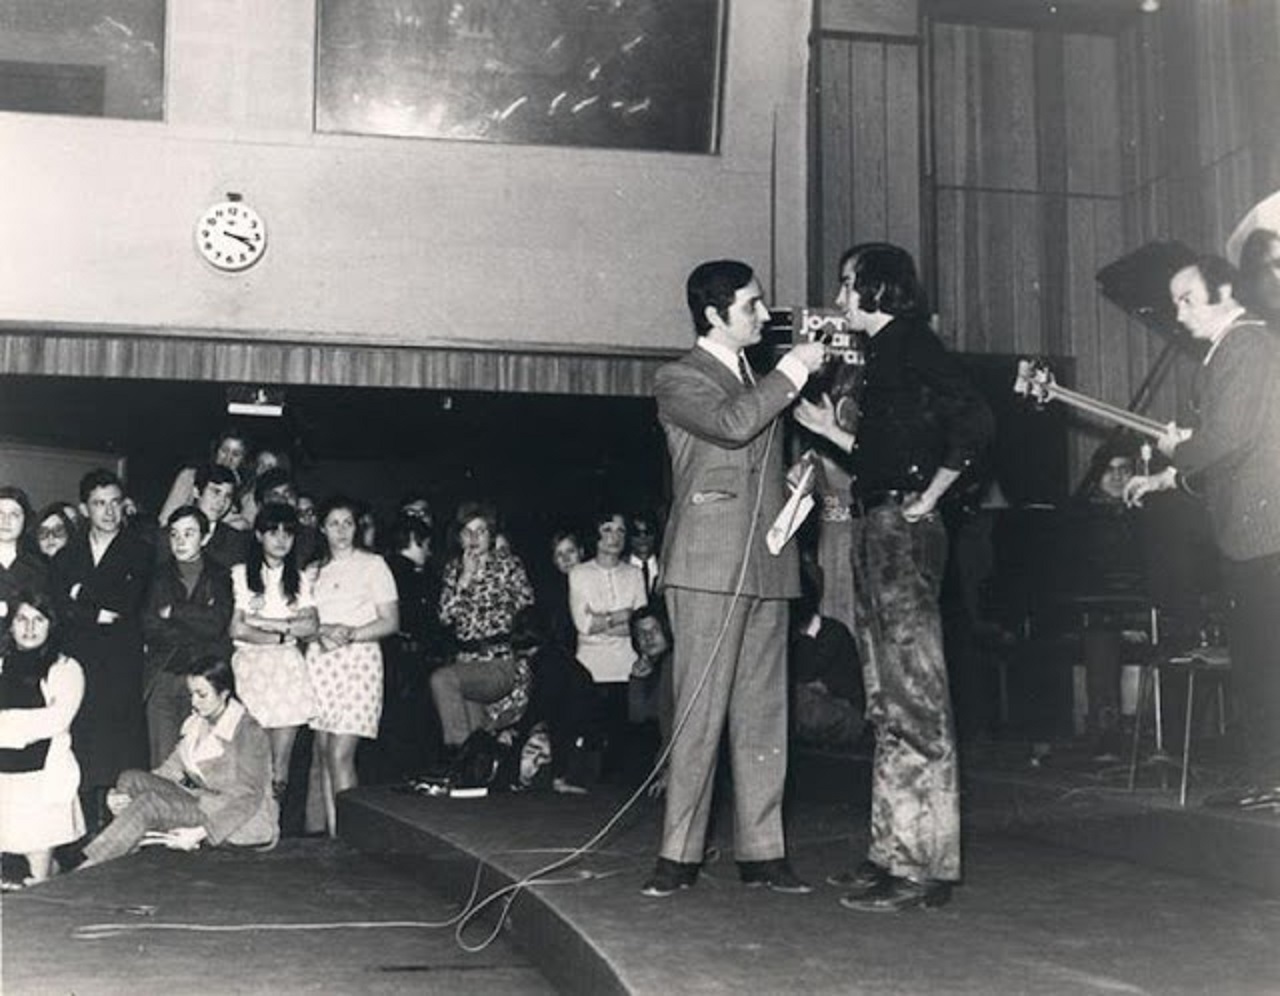 Joan Manuel Serrat started singing in a radio program in Barcelona